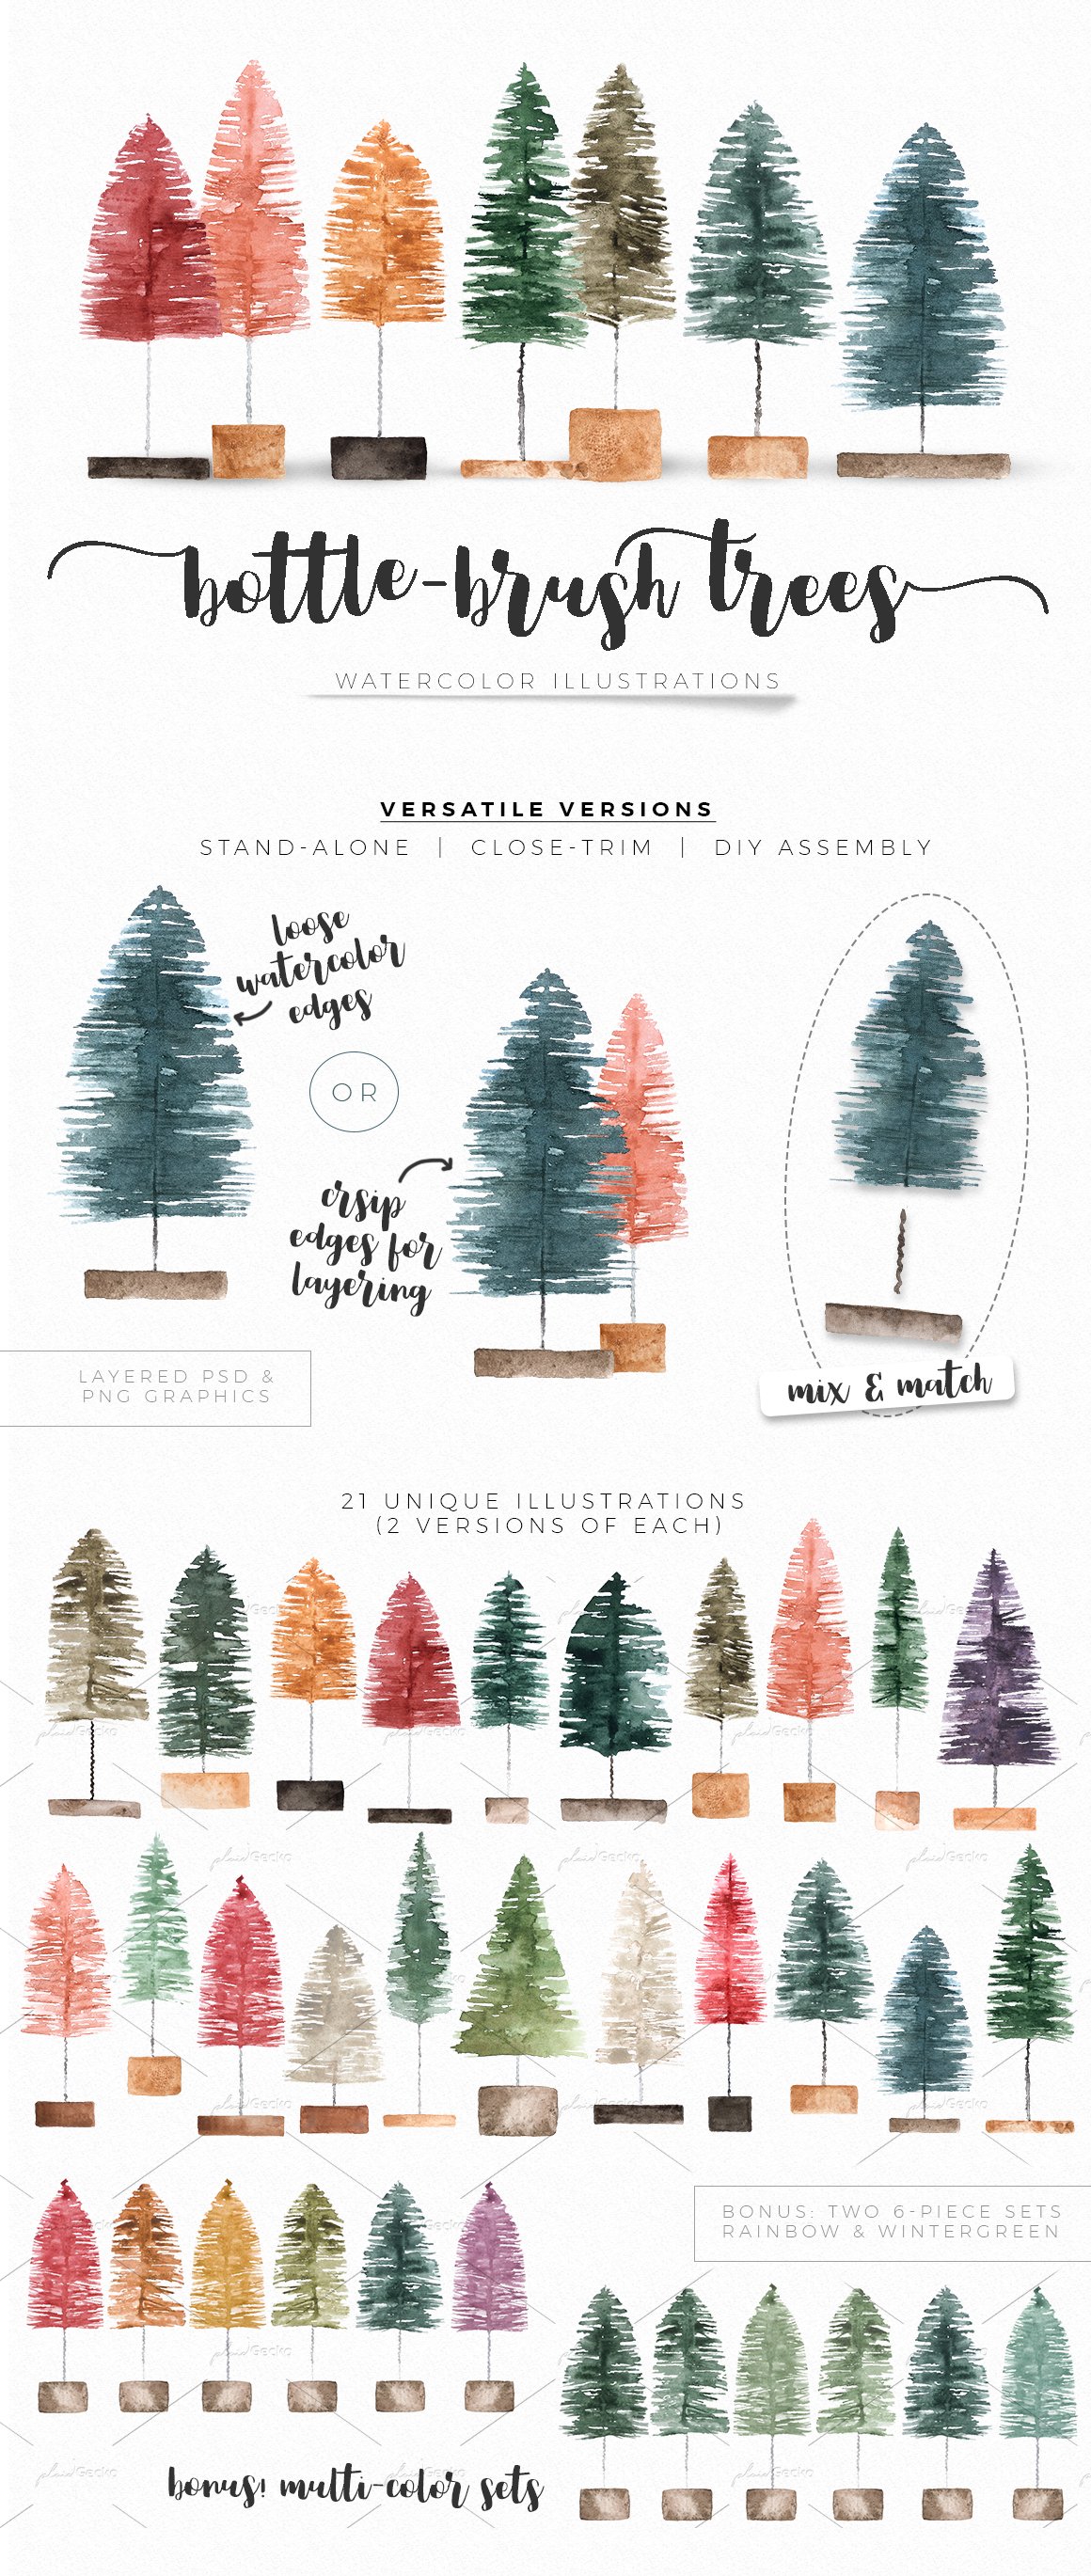 Watercolor bottlebrush trees cover image.